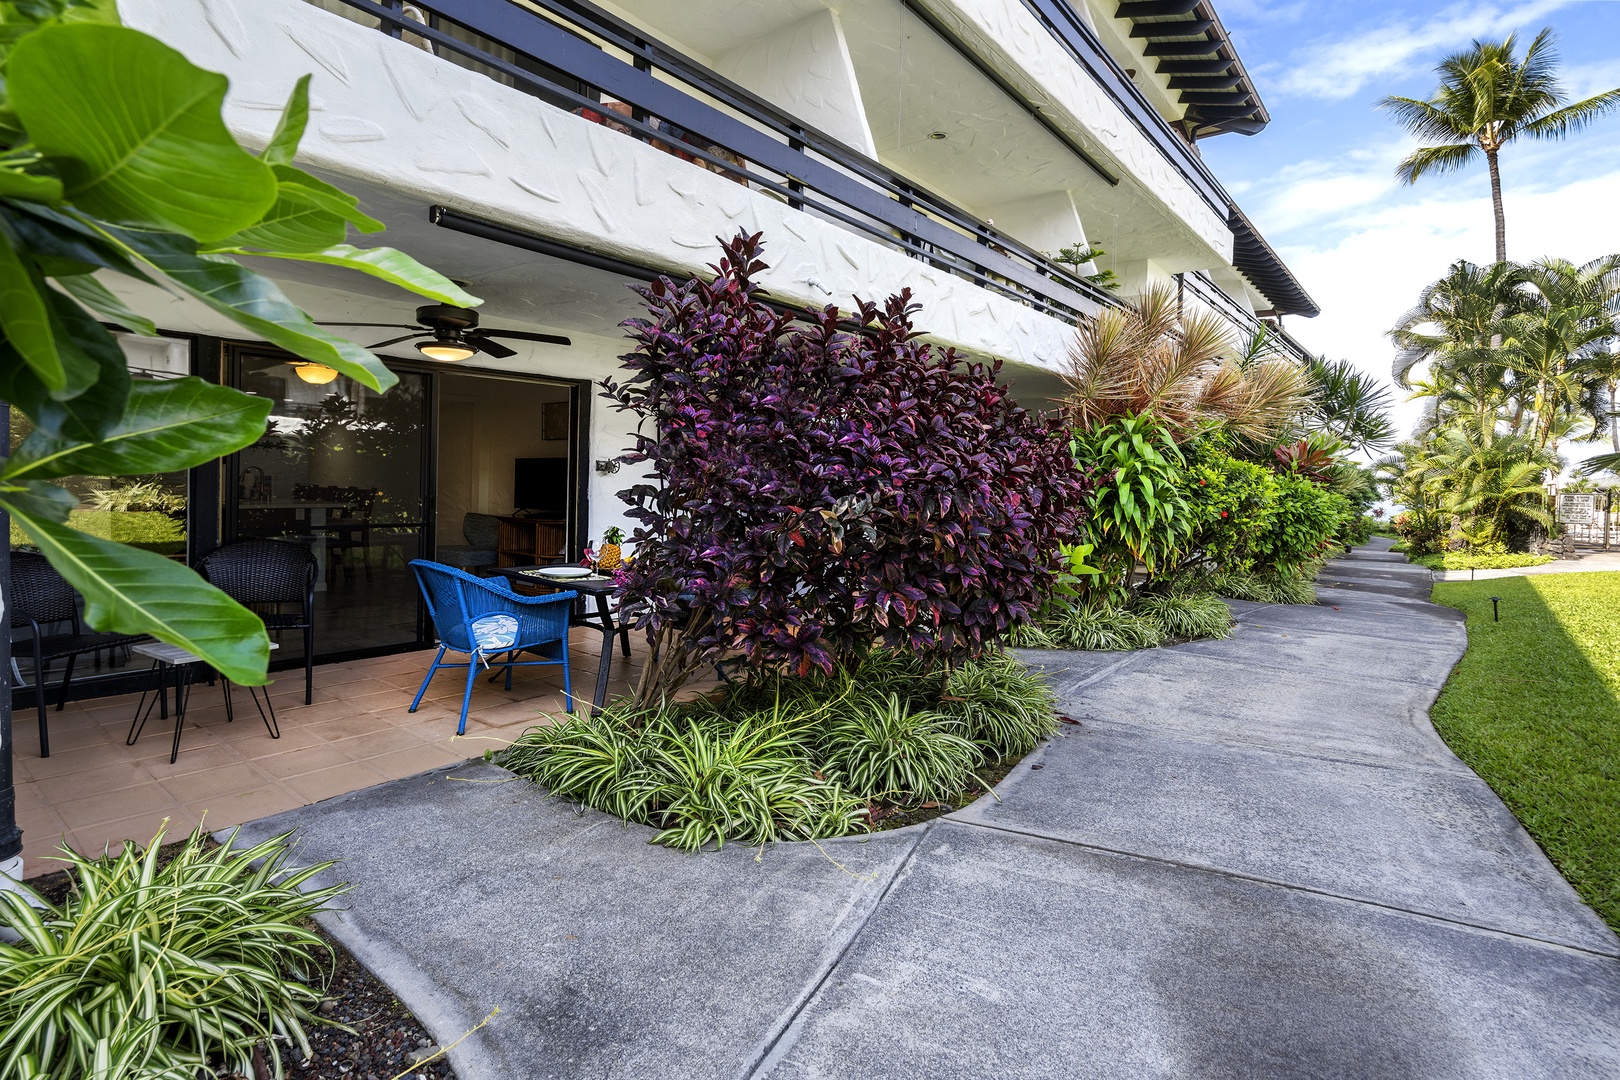 Kailua Kona Vacation Rentals, Casa De Emdeko 104 - Access to the grounds from the back Lanai (ground floor)